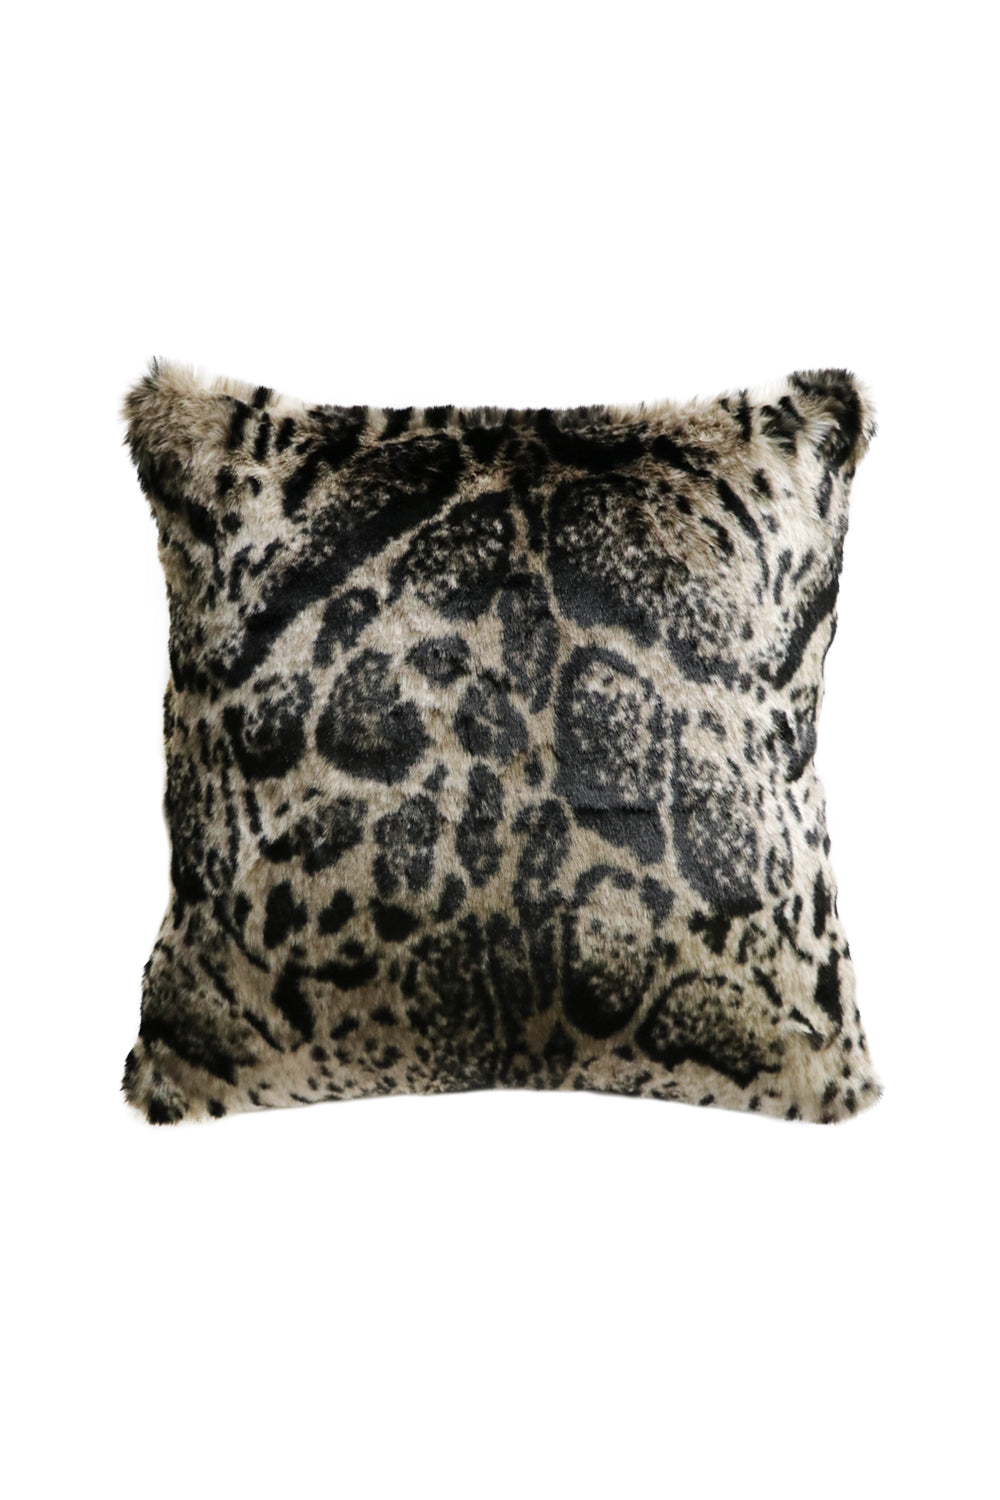 African Leopard imitation fur cushion from Heirloom